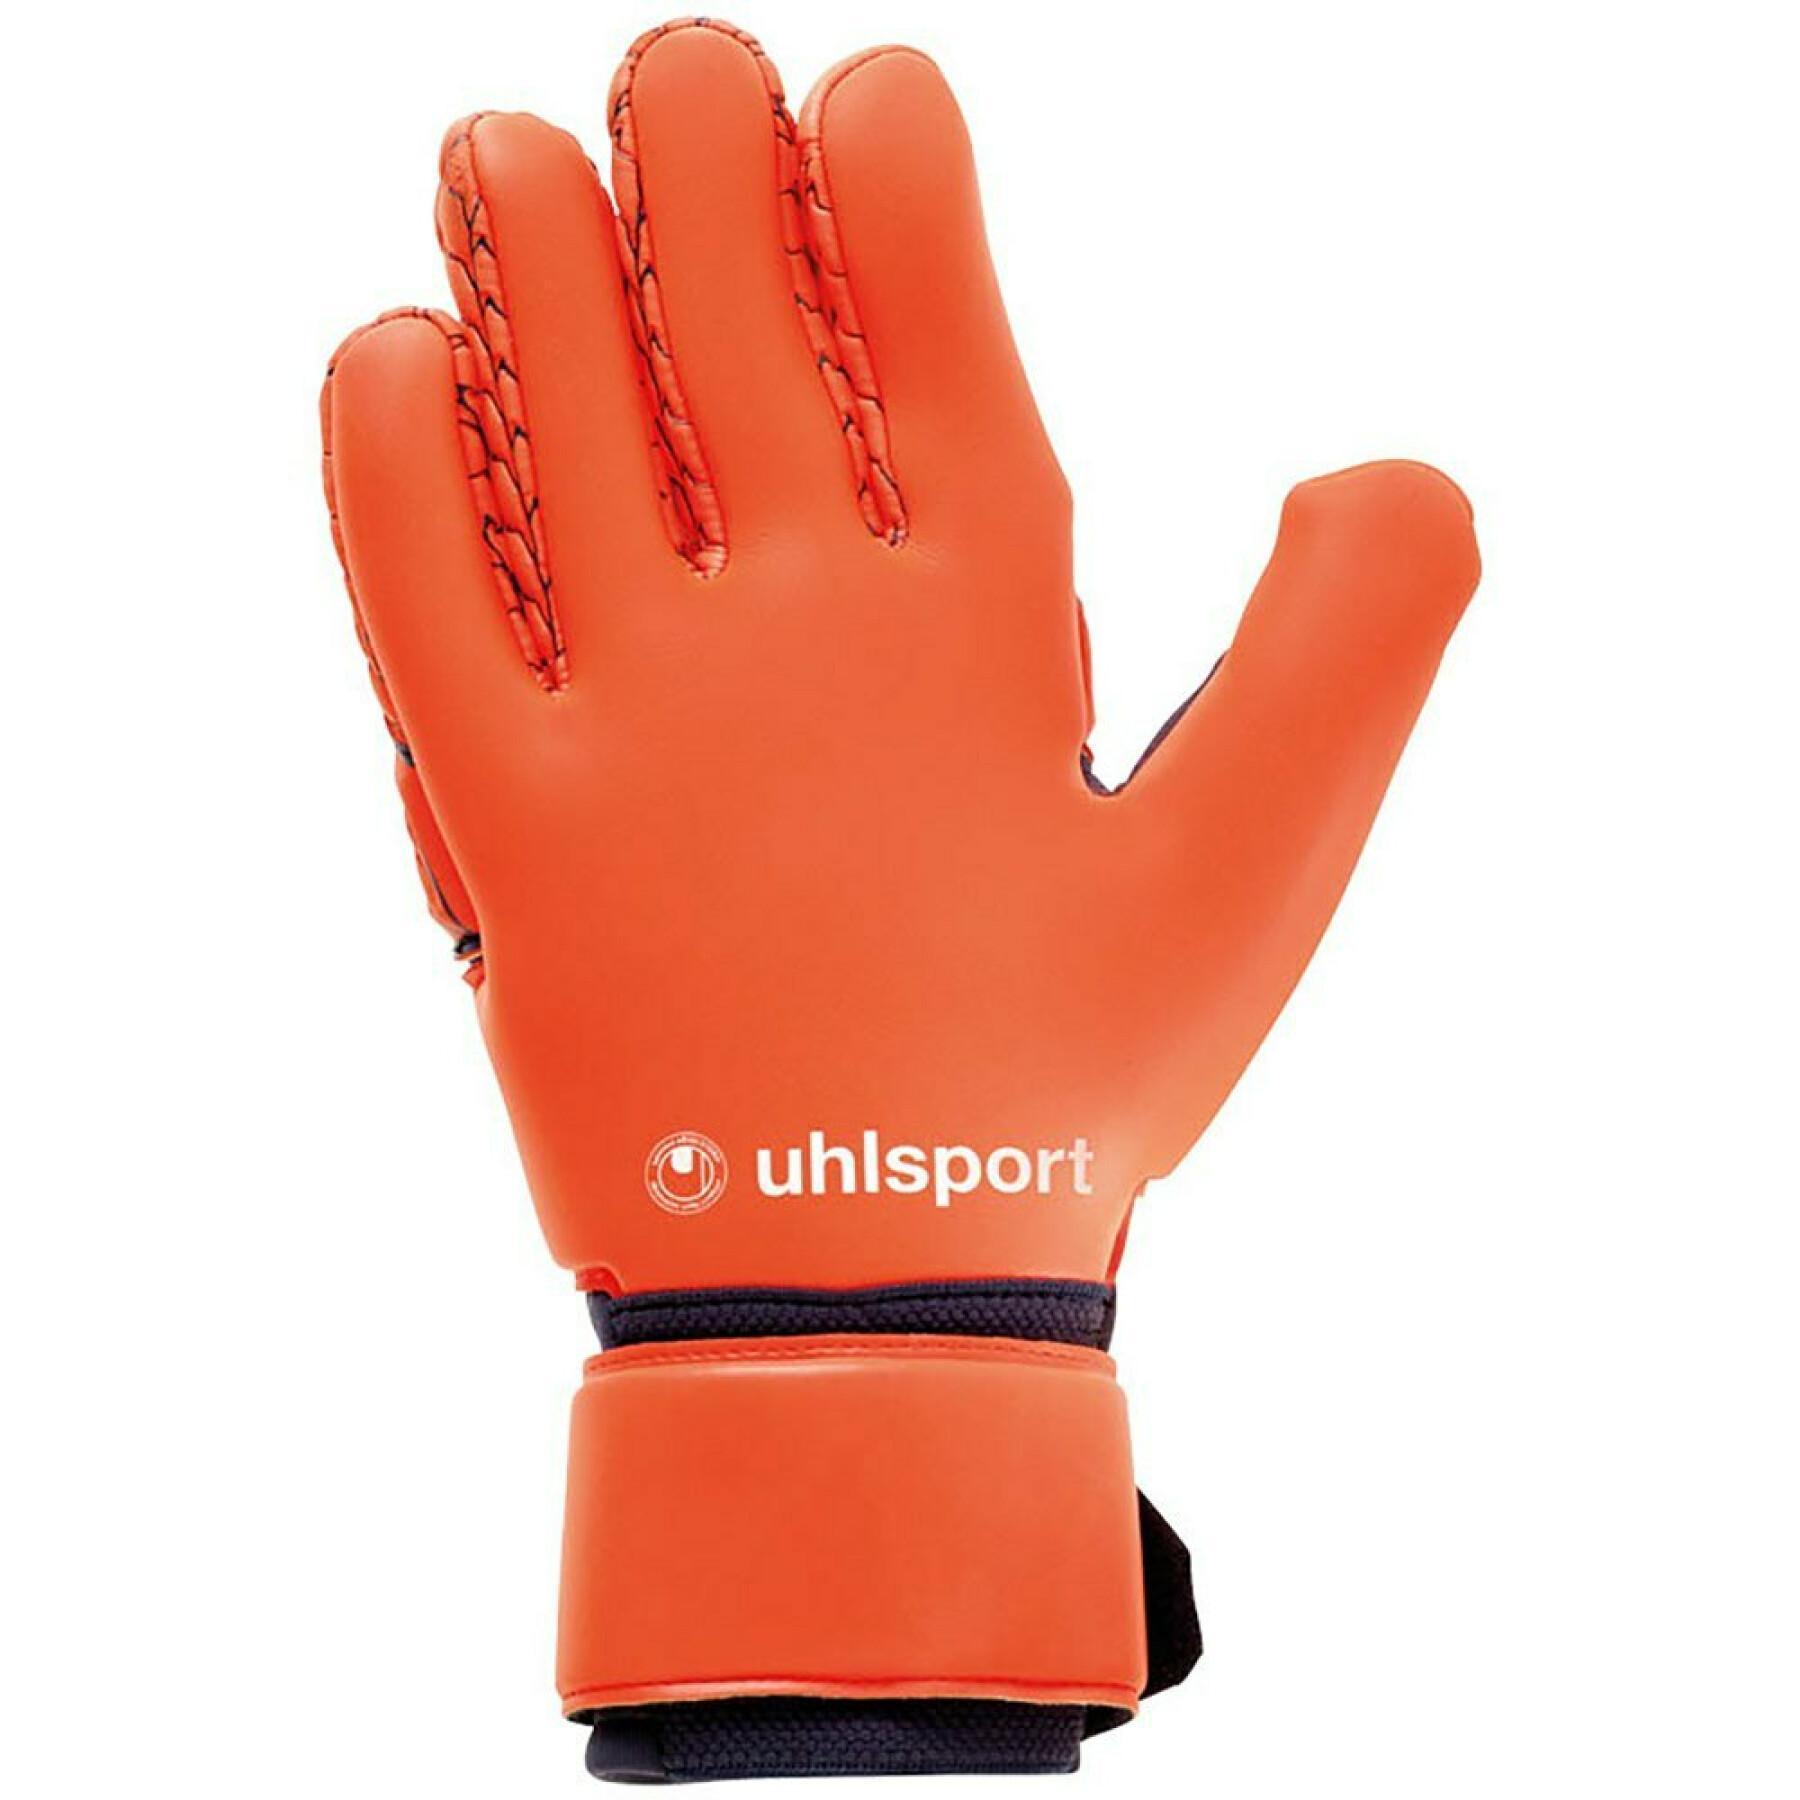 Goalkeeper gloves Uhlsport Next level absolutegrip reflex